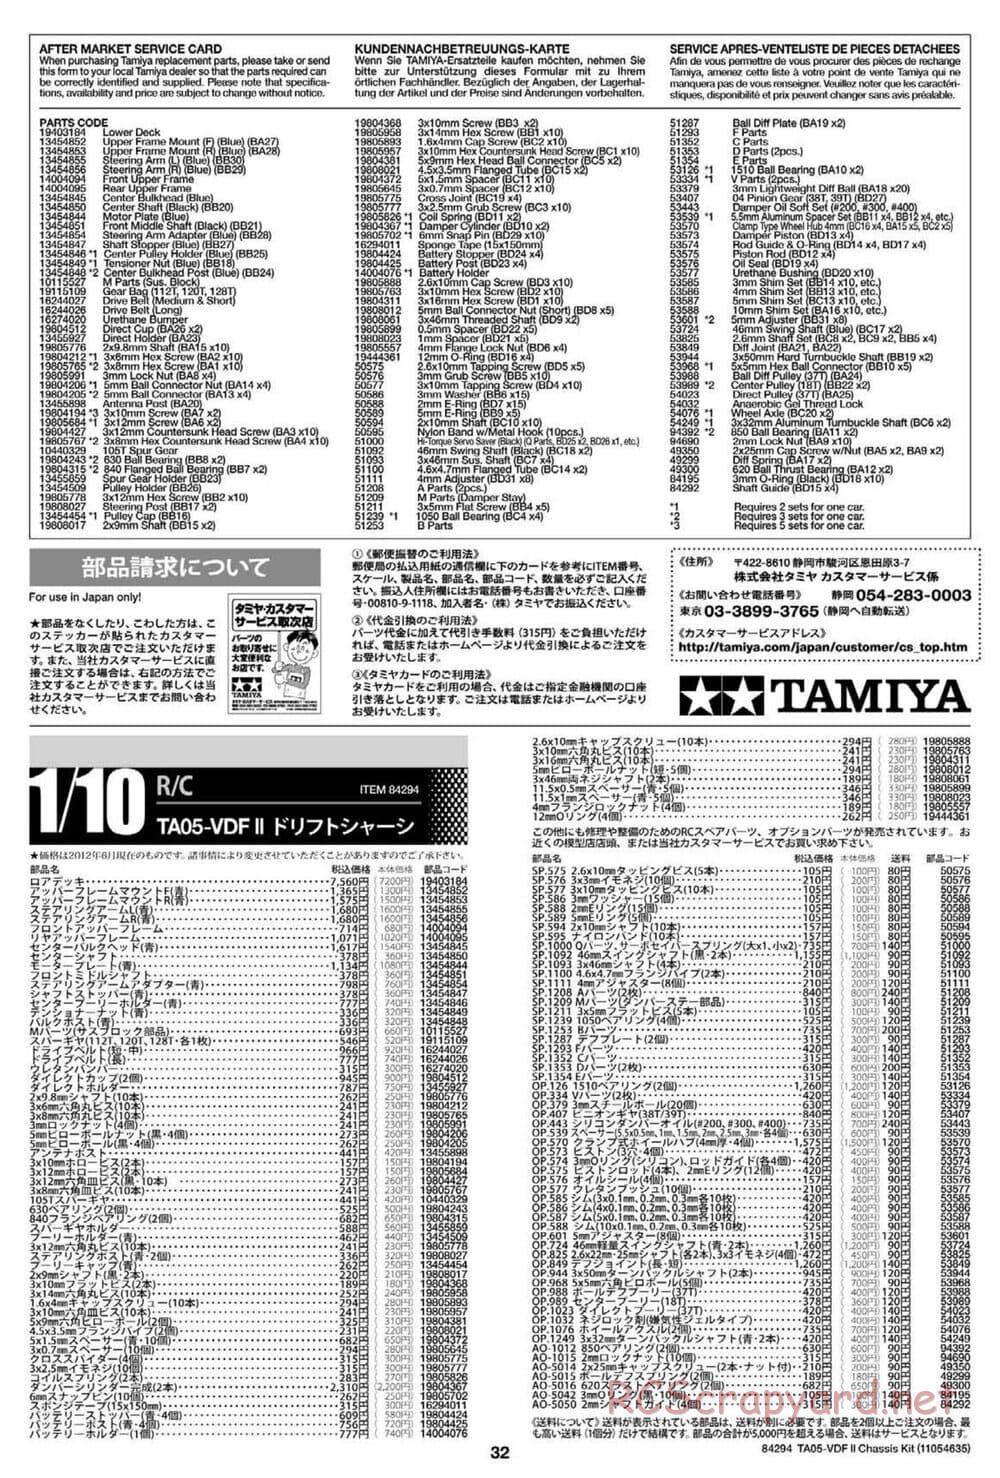 Tamiya - TA05-VDF II Drift Chassis - Manual - Page 32